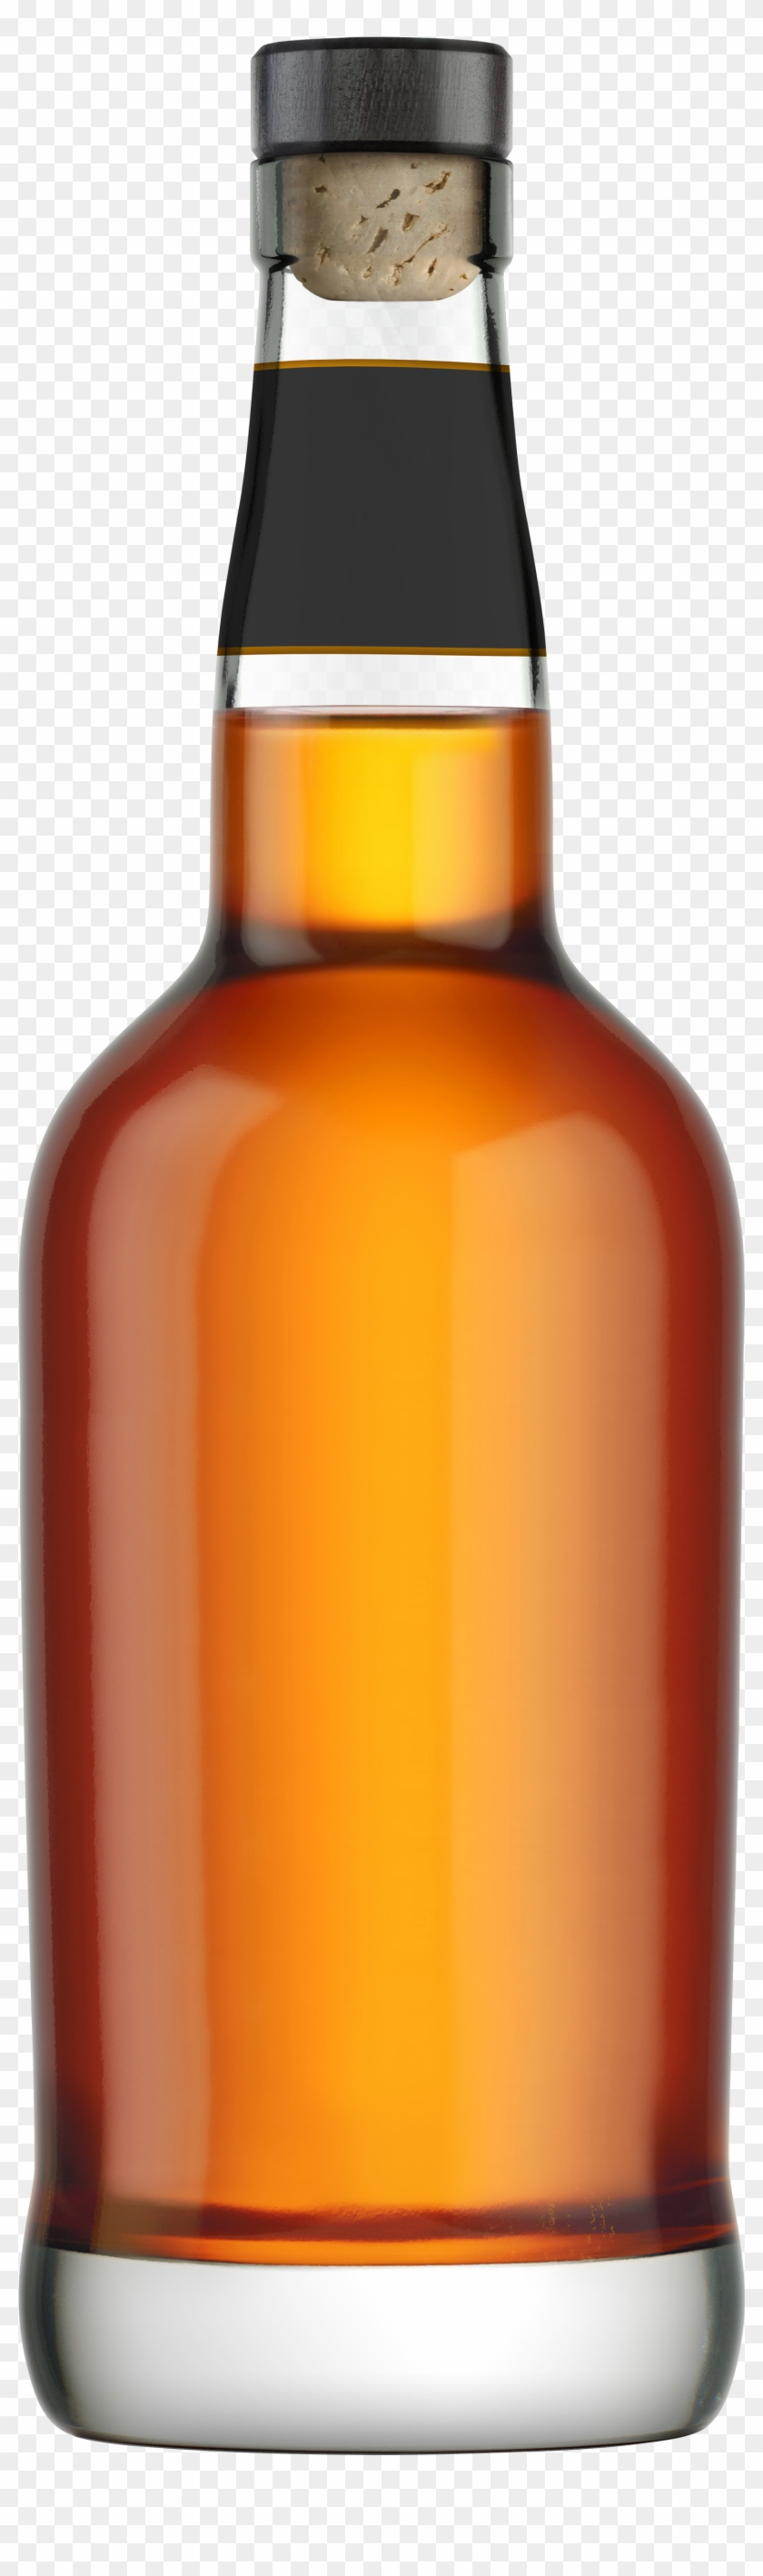 Whiskey Bottle Png Clip Art - Whiskey Bottle Transparent Background #523762